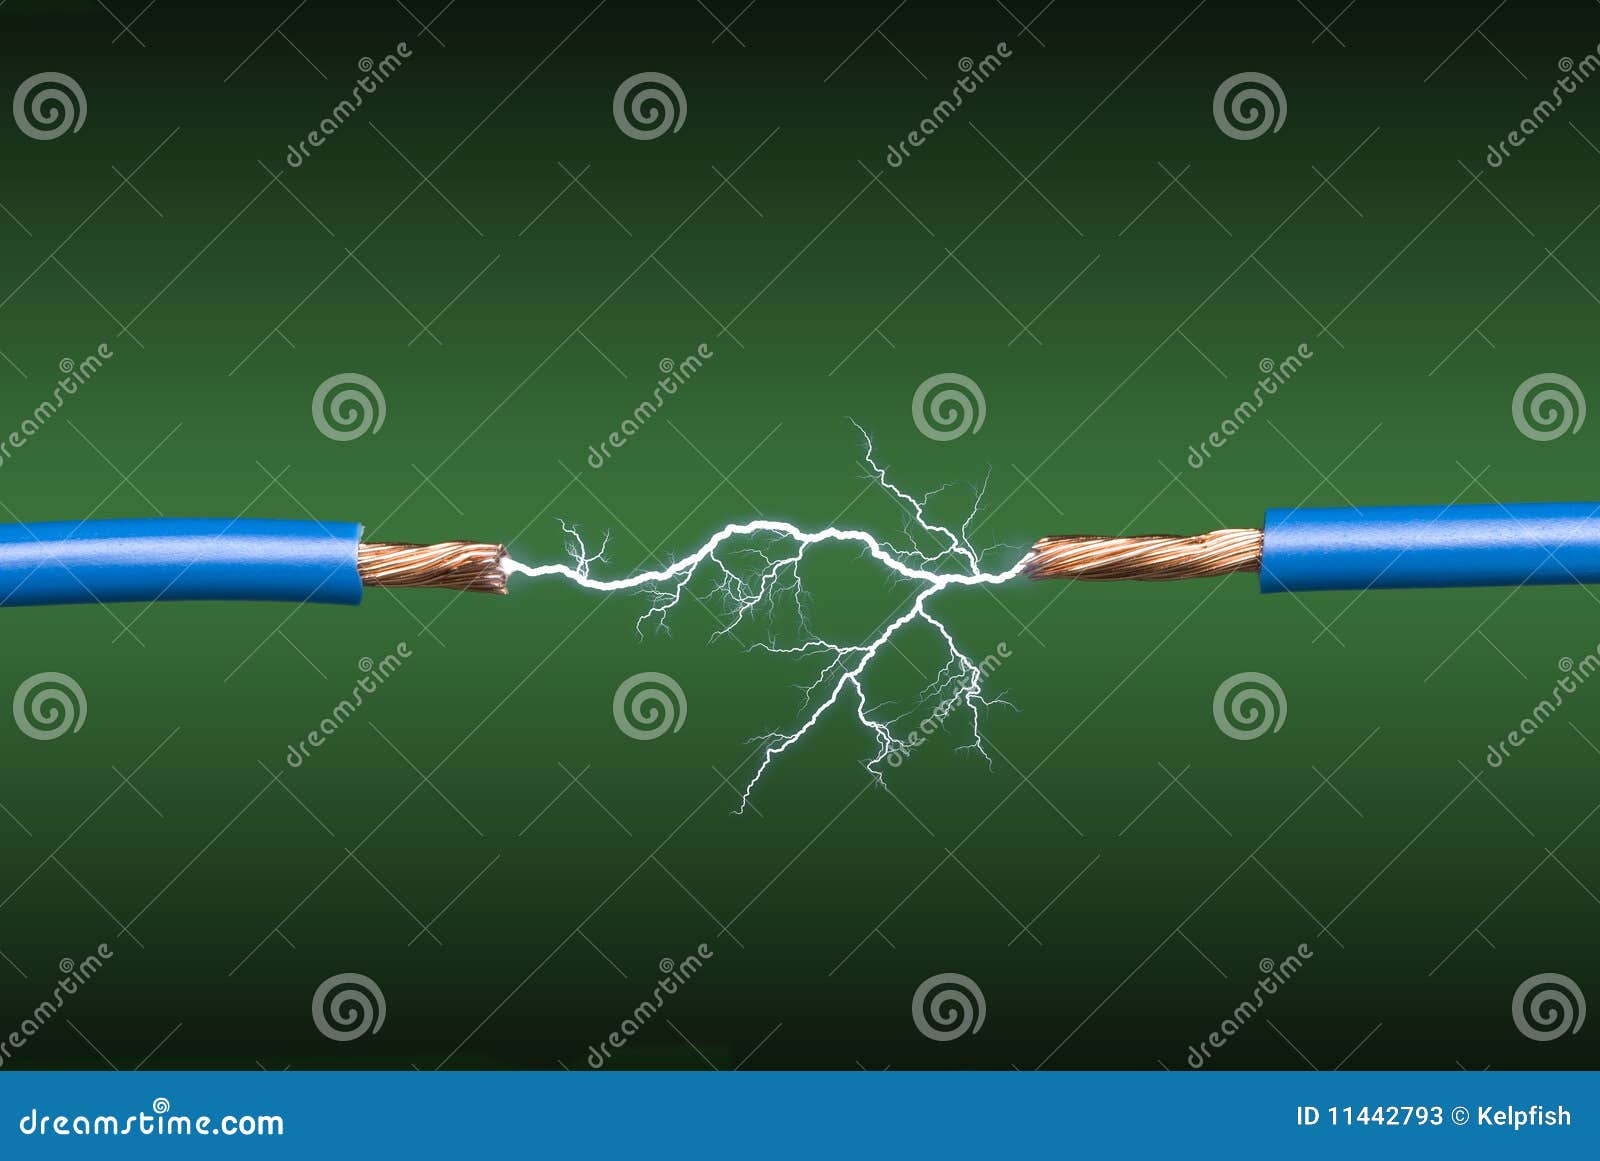 electrical arc